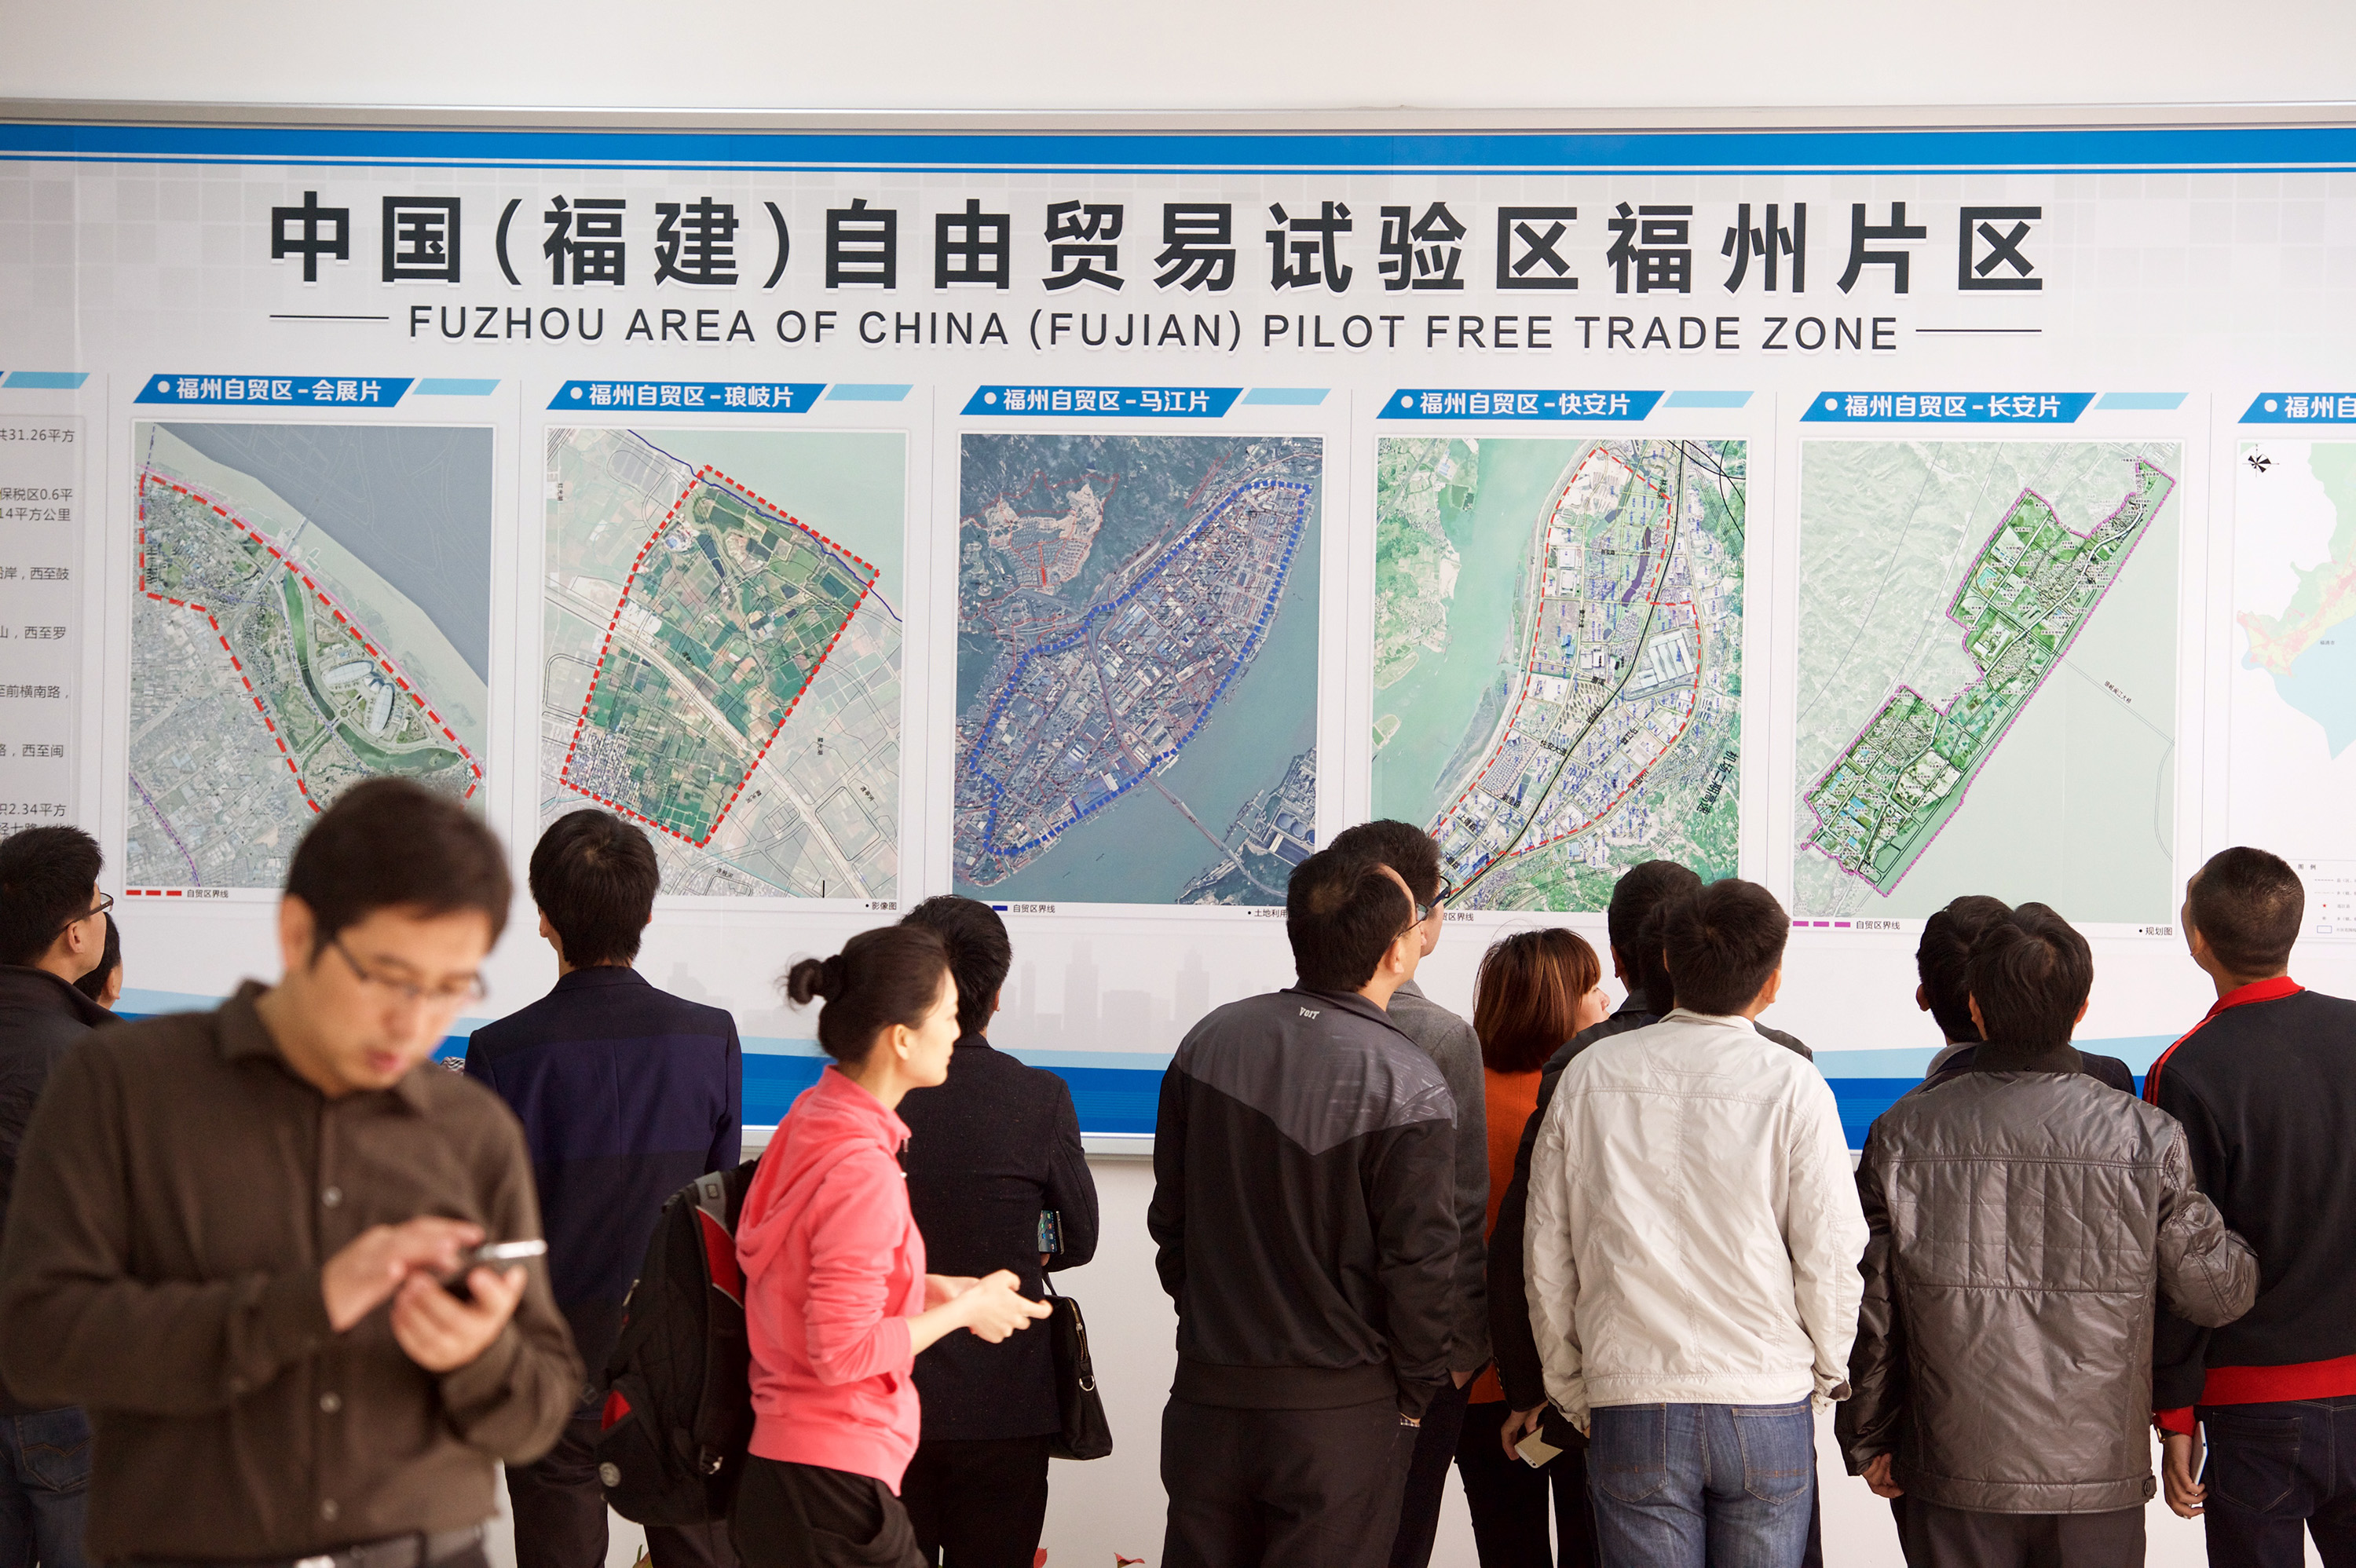 Business people in Fuzhou examine maps of the new free trade zone in Fujian province. Photo: Xinhua